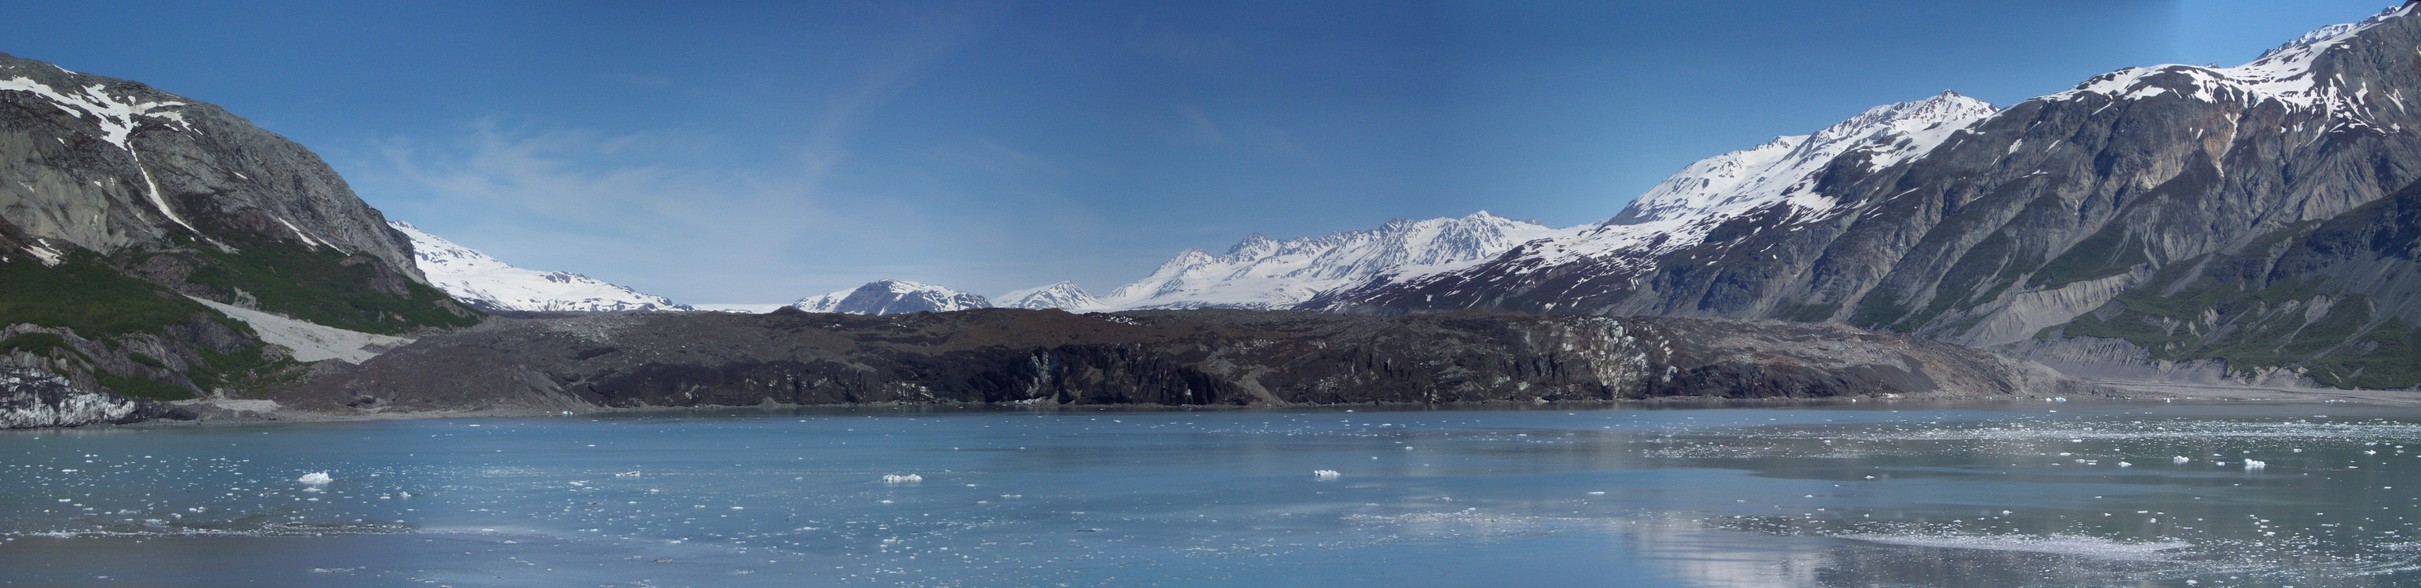 pano17_grand_pacific_glacier_panoramic_180.jpg